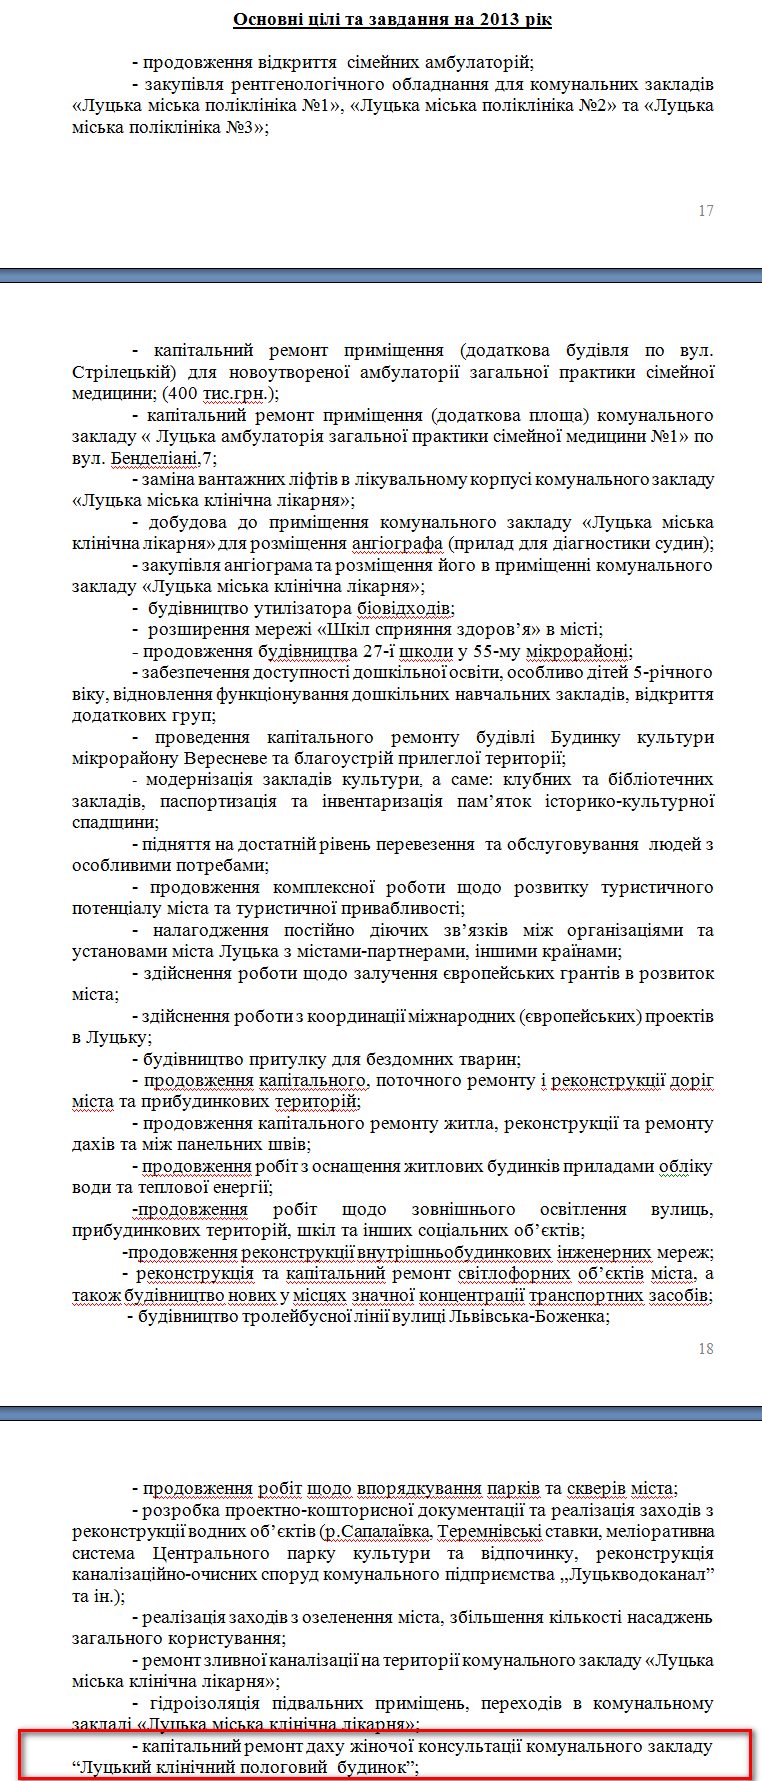 http://www.lutsk.ua/prescription/pro-proekt-programi-ekonomichnogo-i-socialnogo-rozvitku-mista-lucka-na-2013-rik